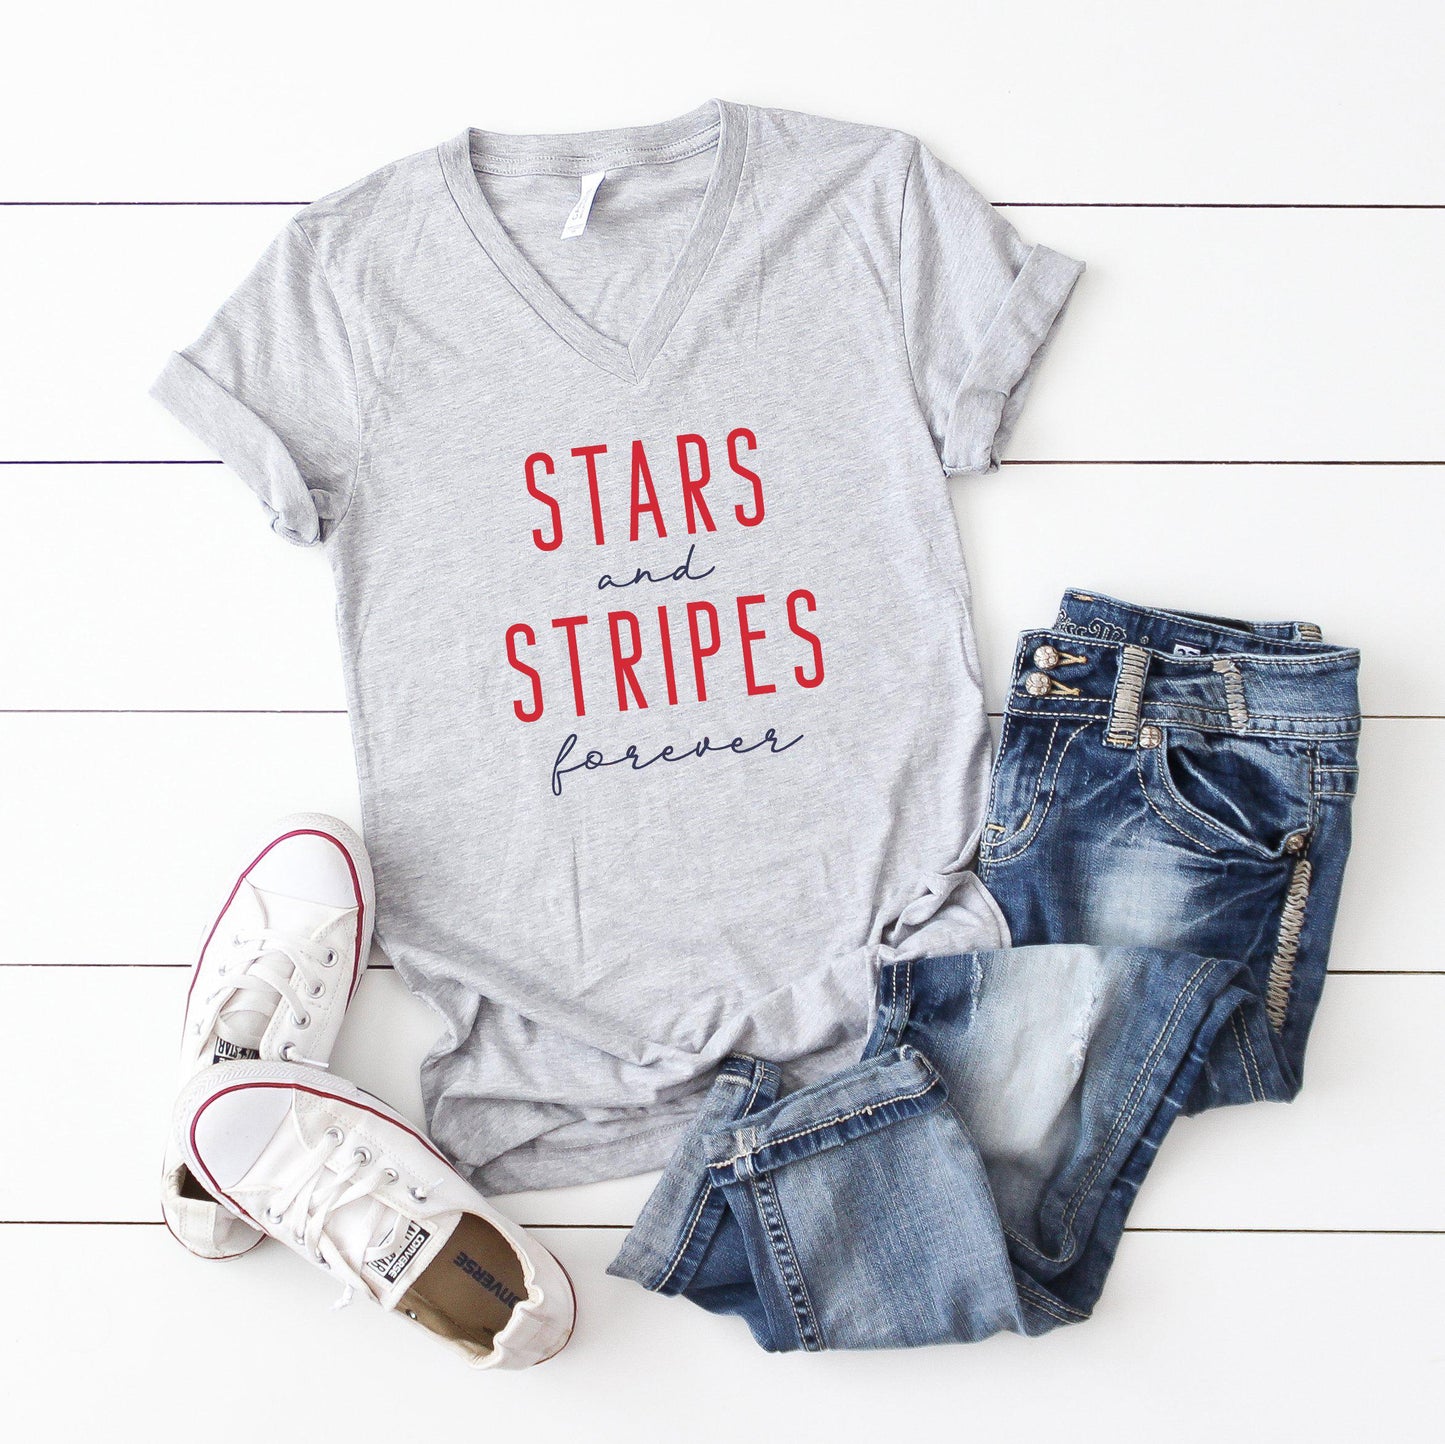 Stars and Stripes Forever | V-Neck Graphic Tee